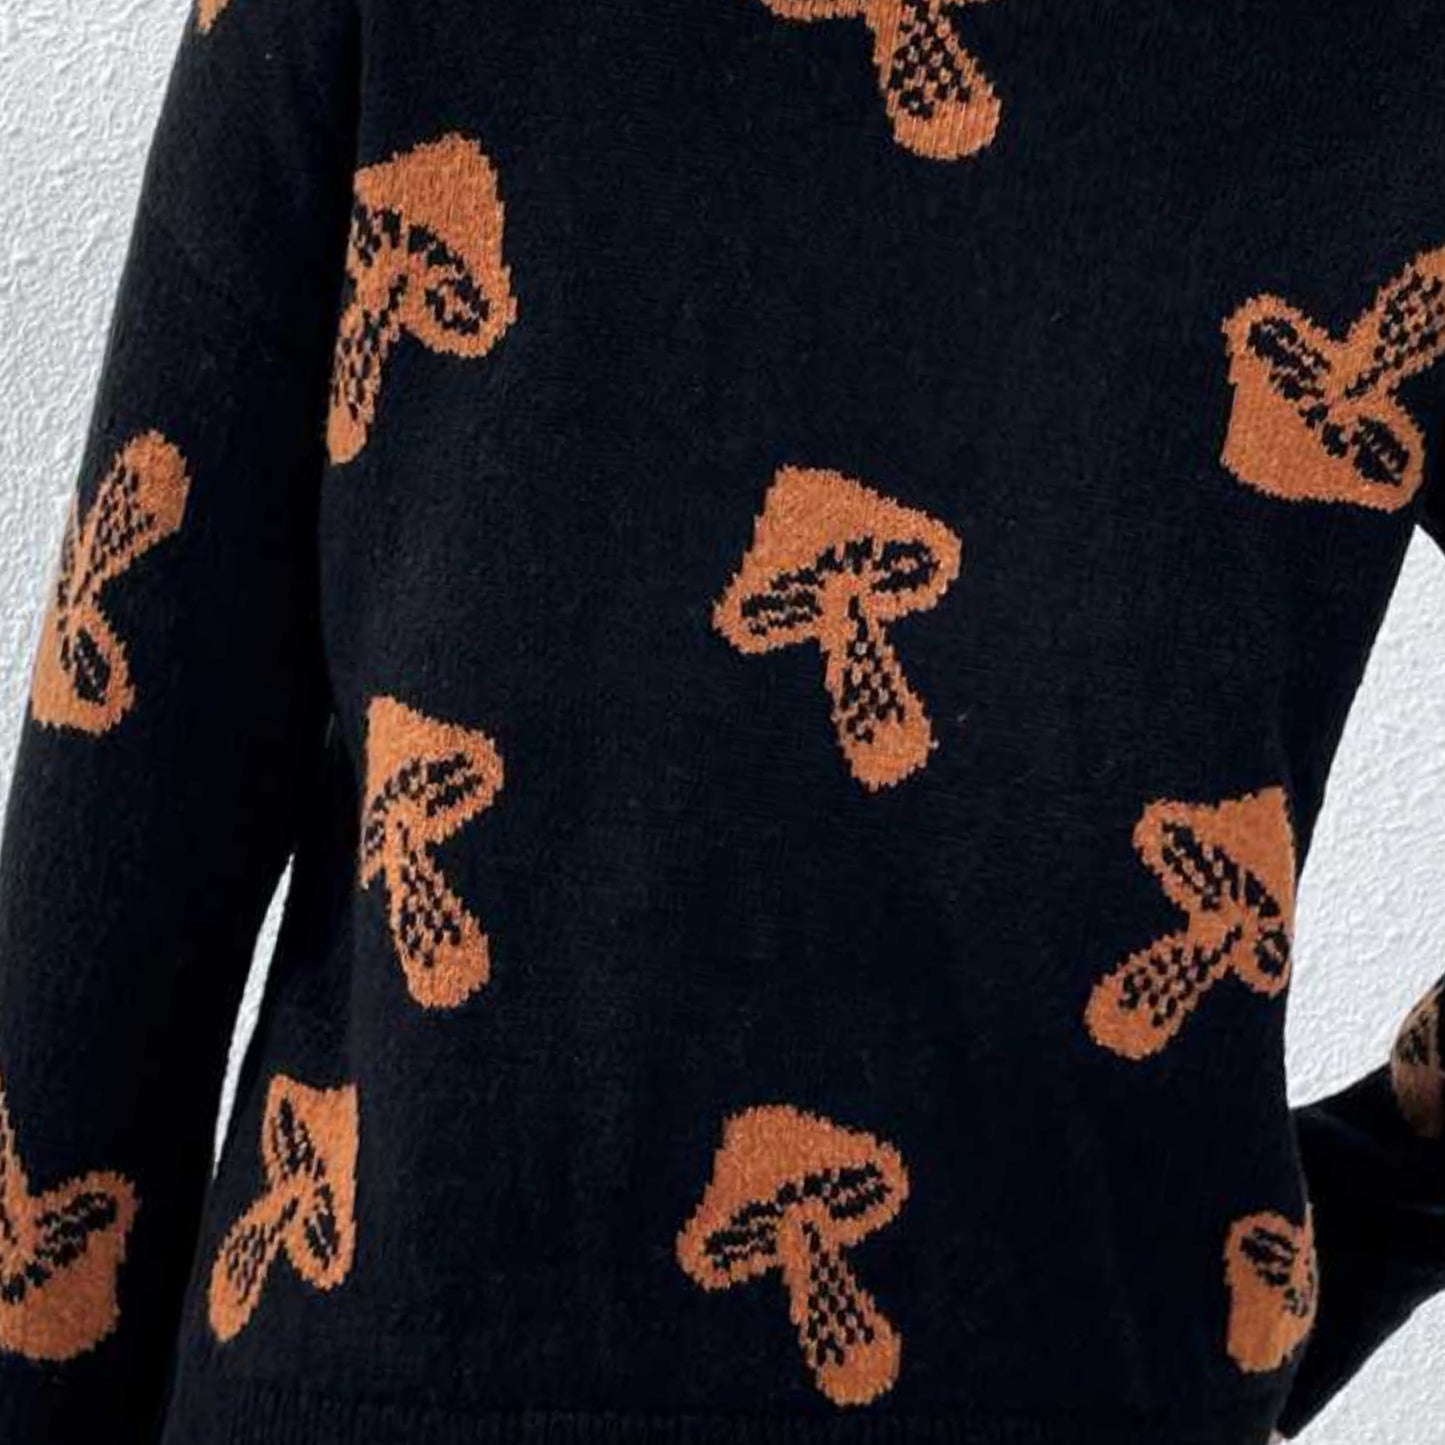 Unique Print Knit Pullover Celestial Mushroom Skull Yin Yang Sweater Shirt